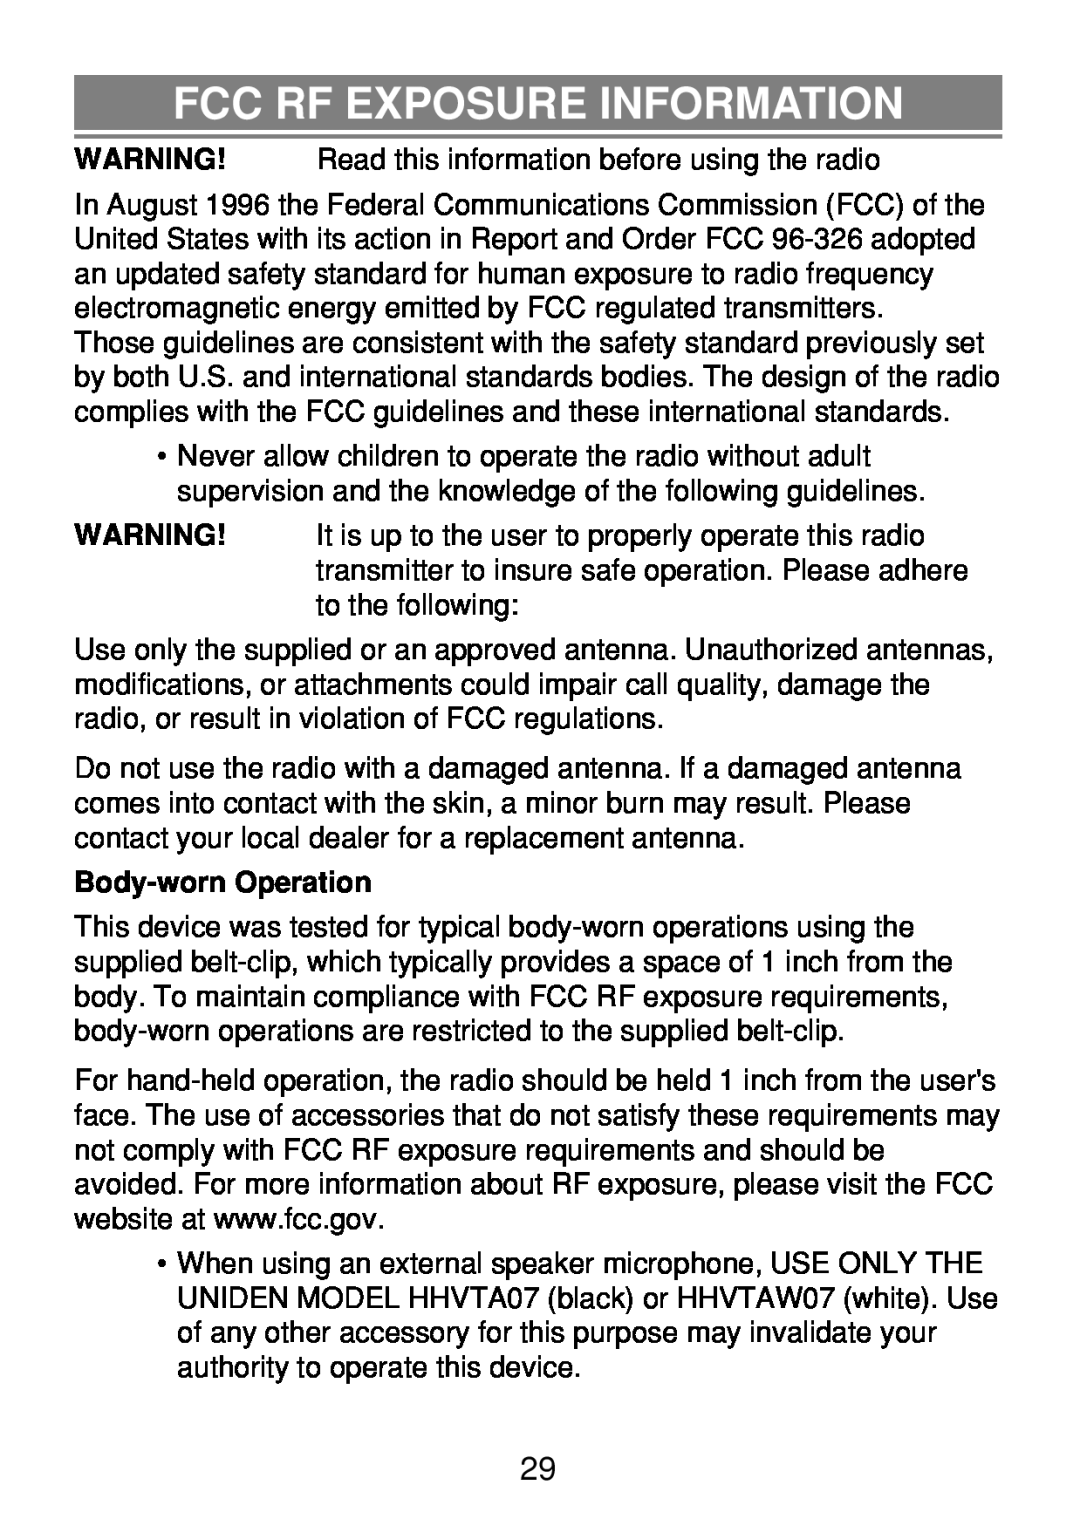 Uniden 250 manual Fcc Rf Exposure Information, Body-wornOperation 